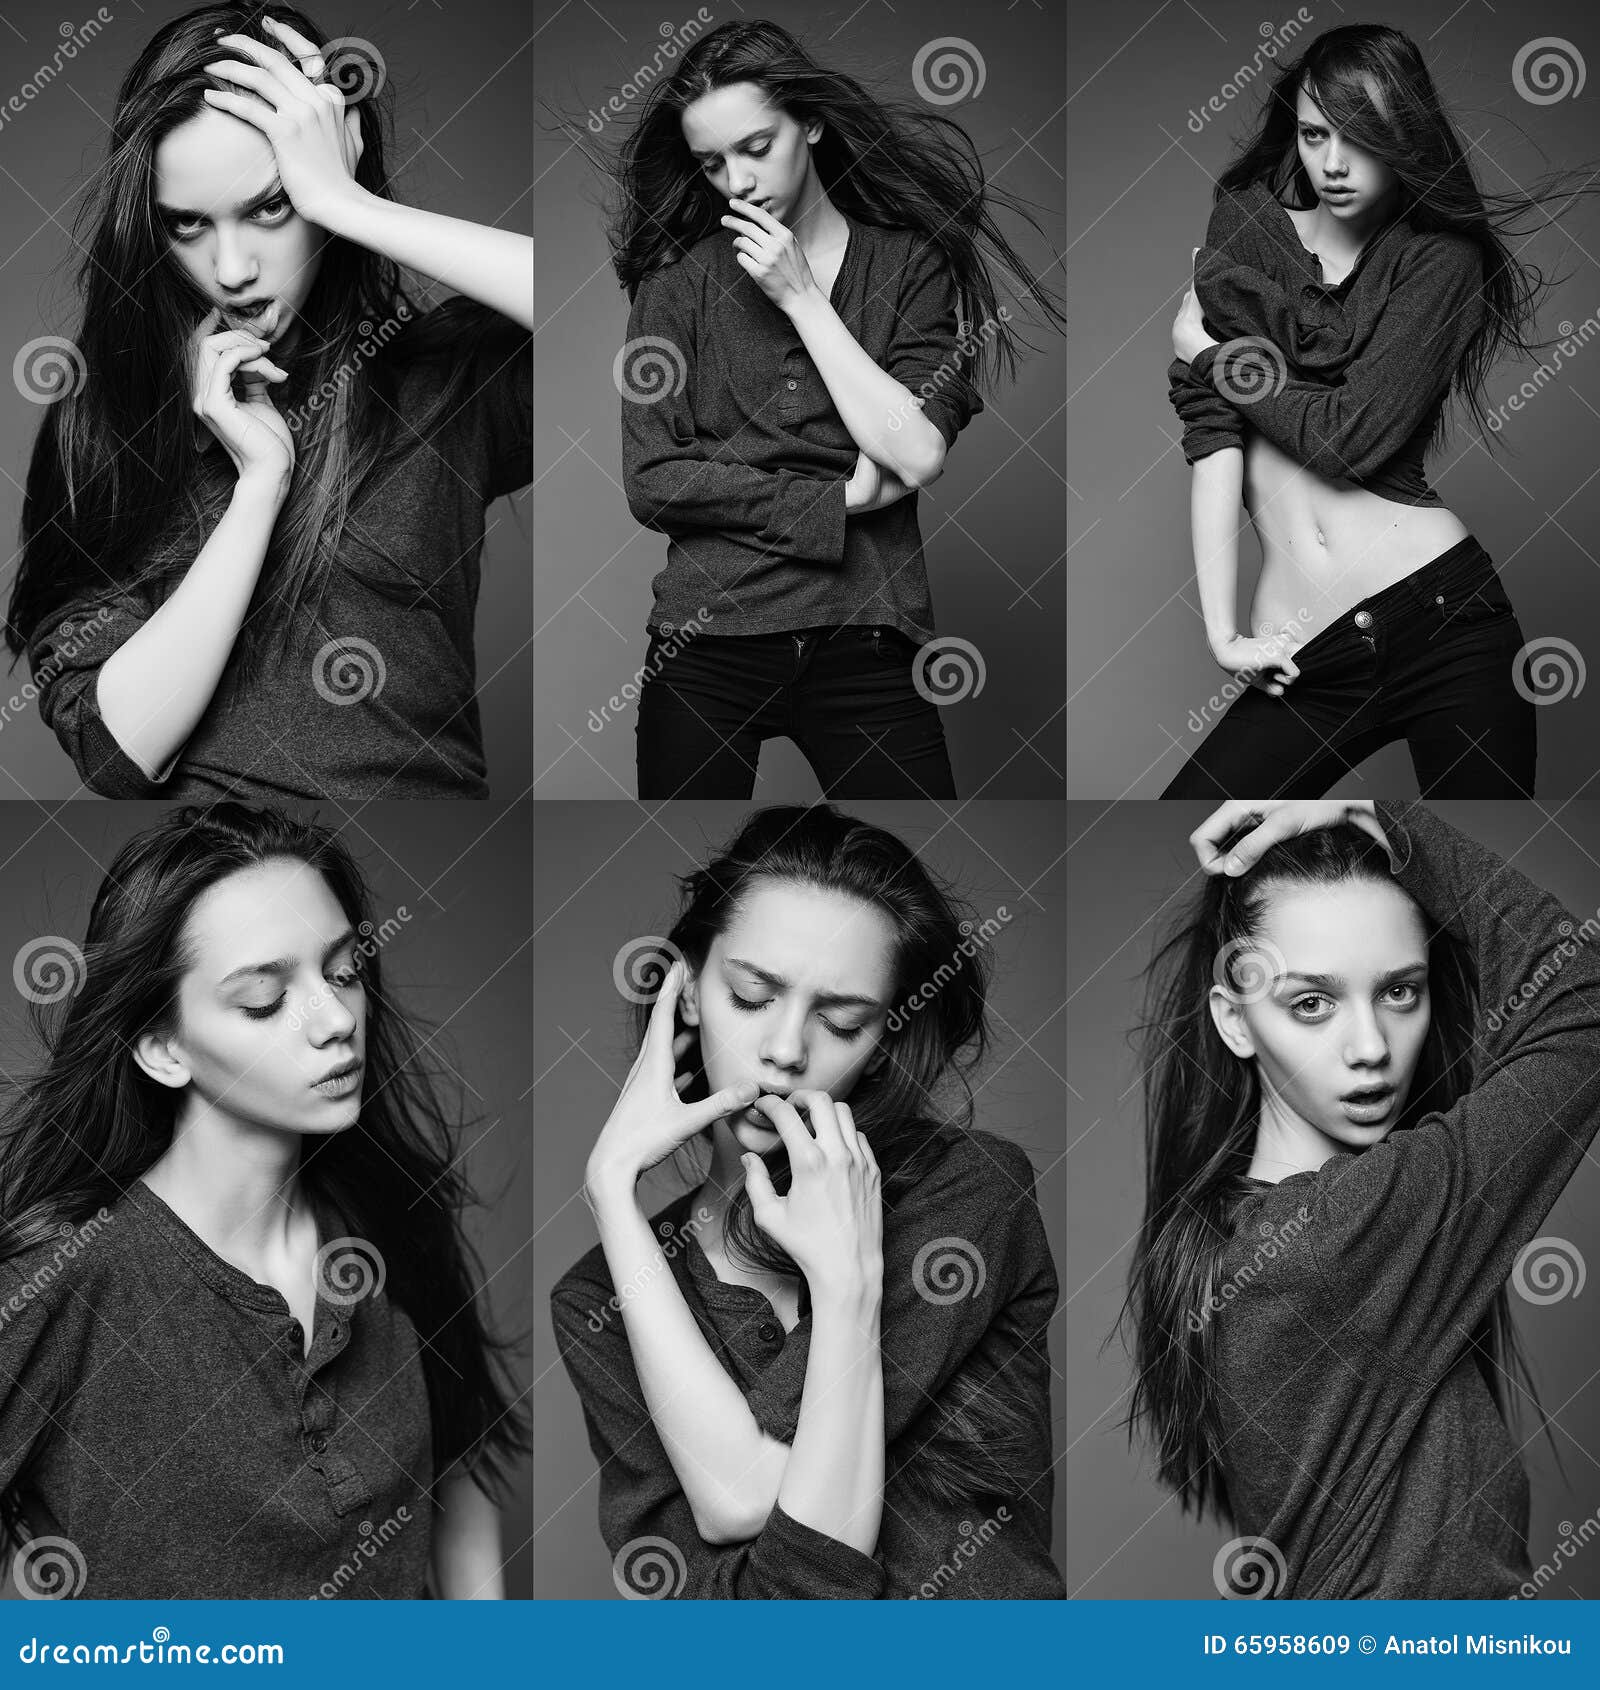 six image same fashion model different poses studio shot 65958609